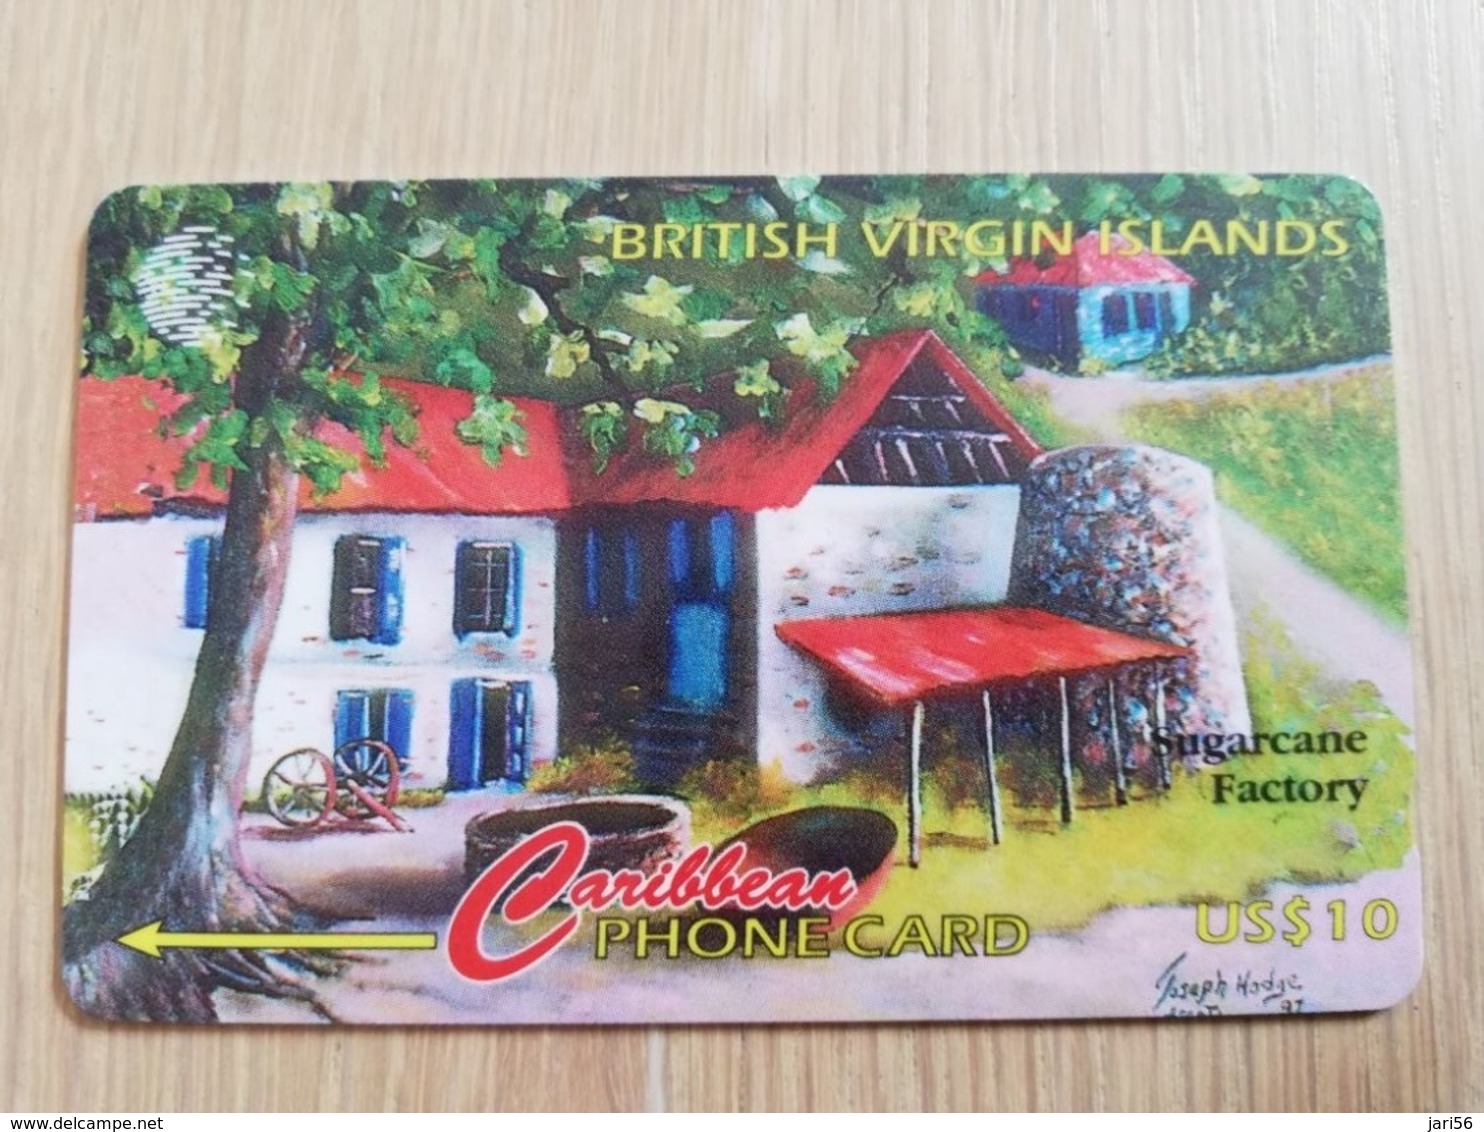 BRITSCH VIRGIN ISLANDS  US$ 10  BVI-193H   SUGARCANE FACTORY   193CBVH     Fine Used Card   ** 2690** - Jungferninseln (Virgin I.)